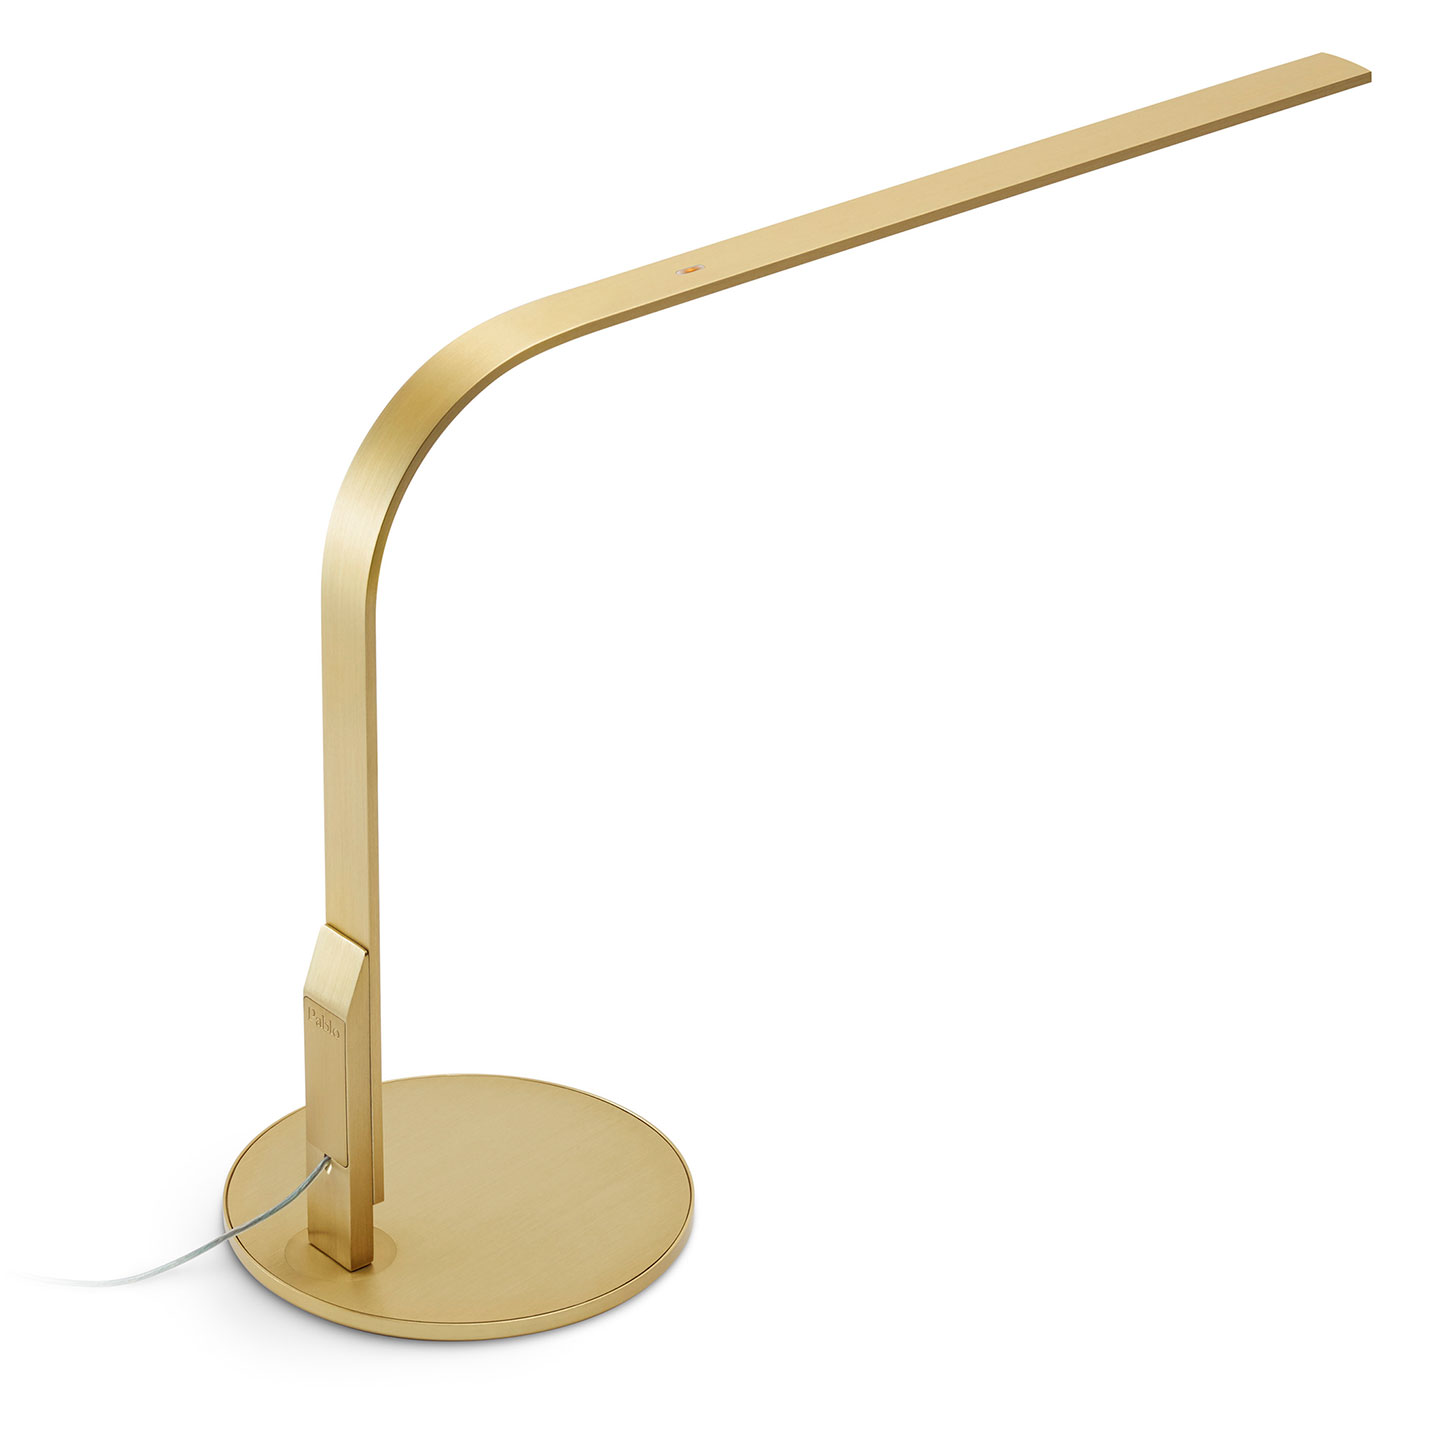 Haworth Lim360 Lighting desk lamp in a gold color